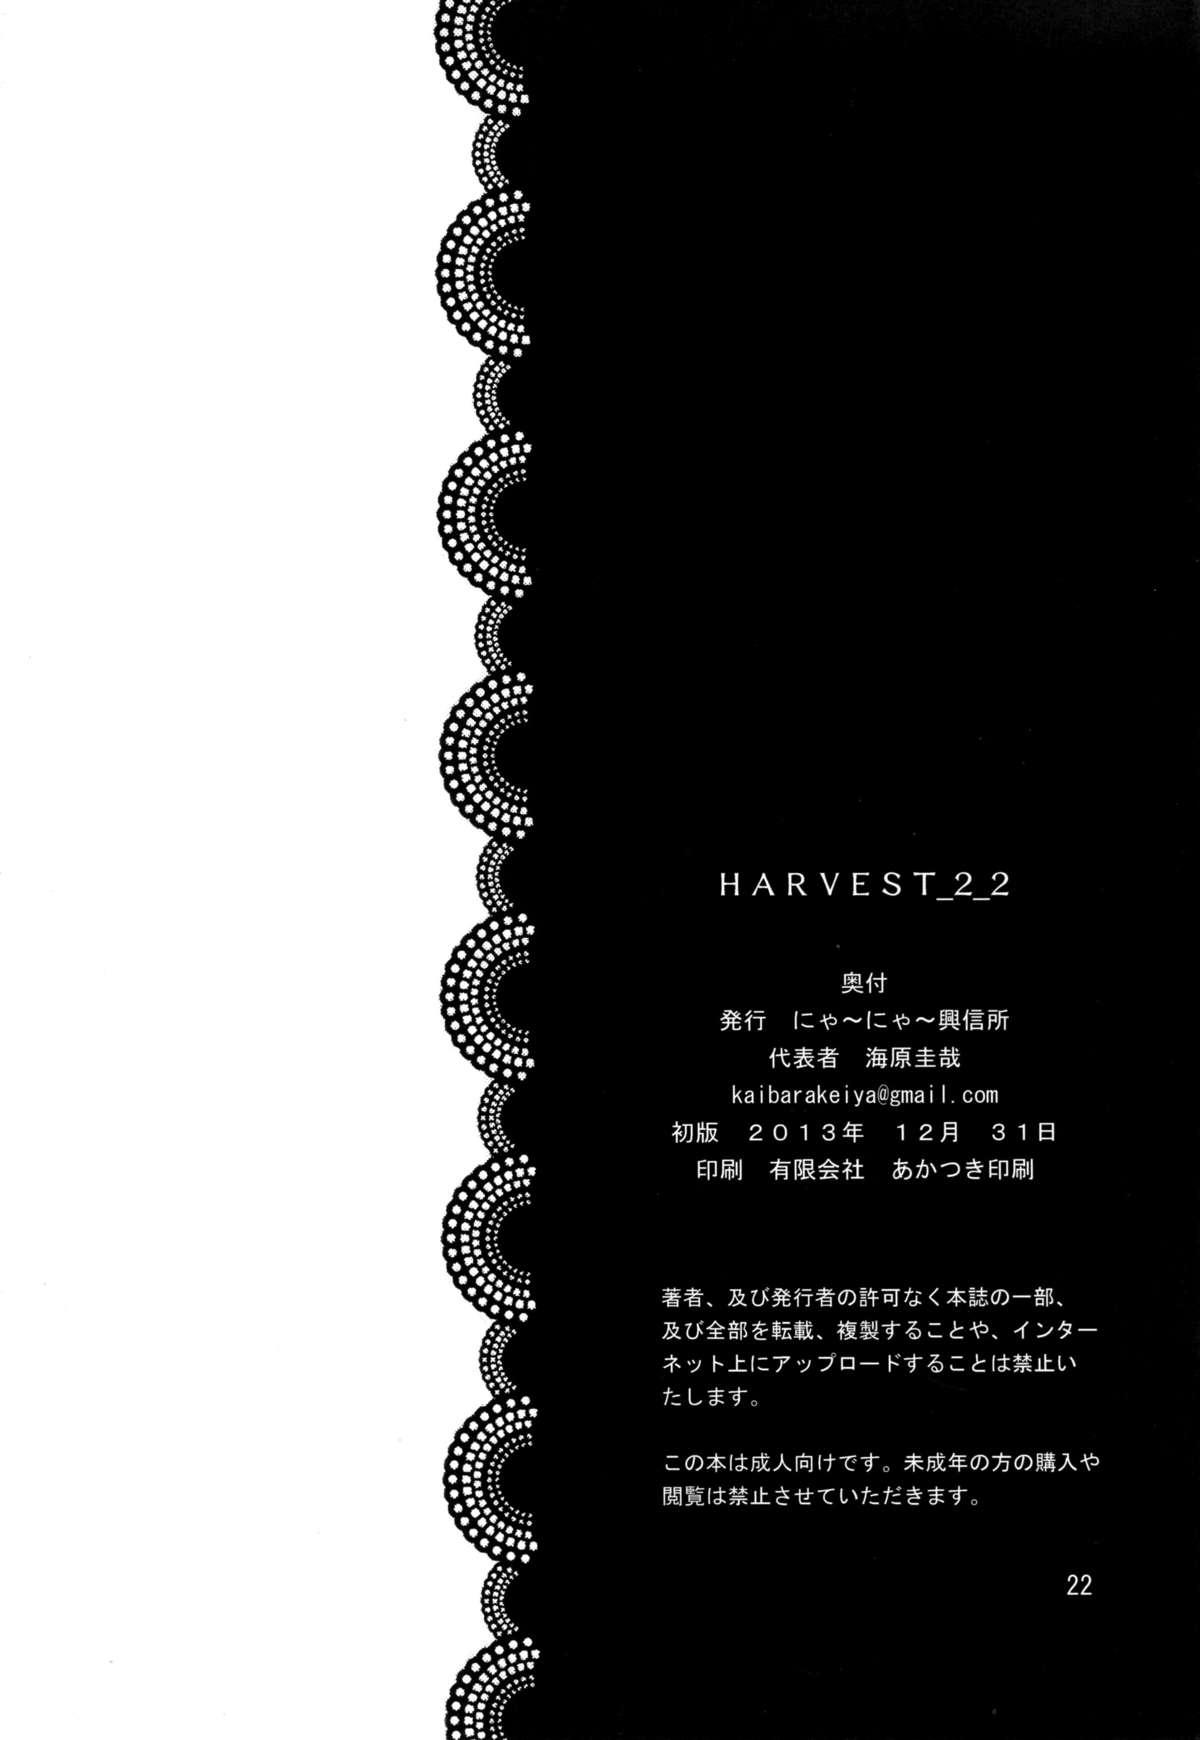 HARVEST_2_2 22